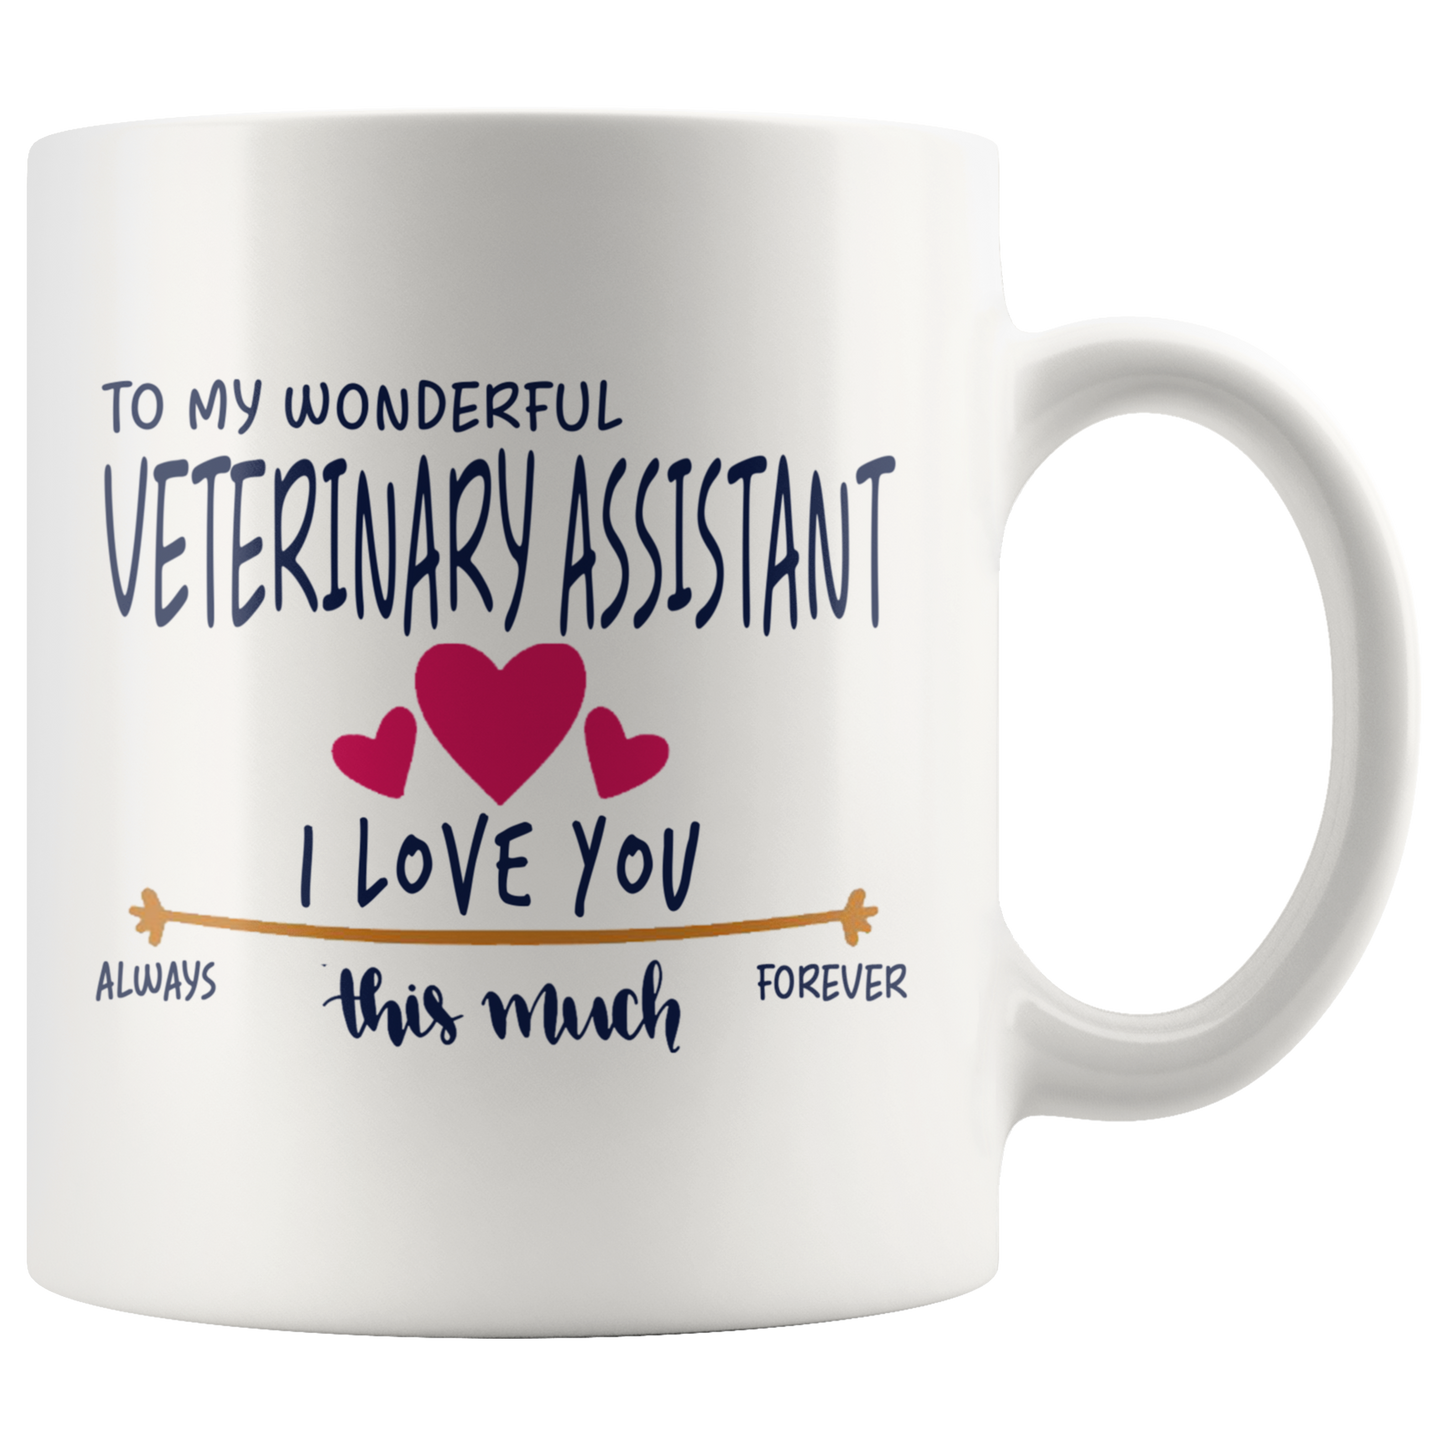 M-20380139-sp-23437 - Merry Christmas Mug Gift - to My Wonderful Veterinary Assist